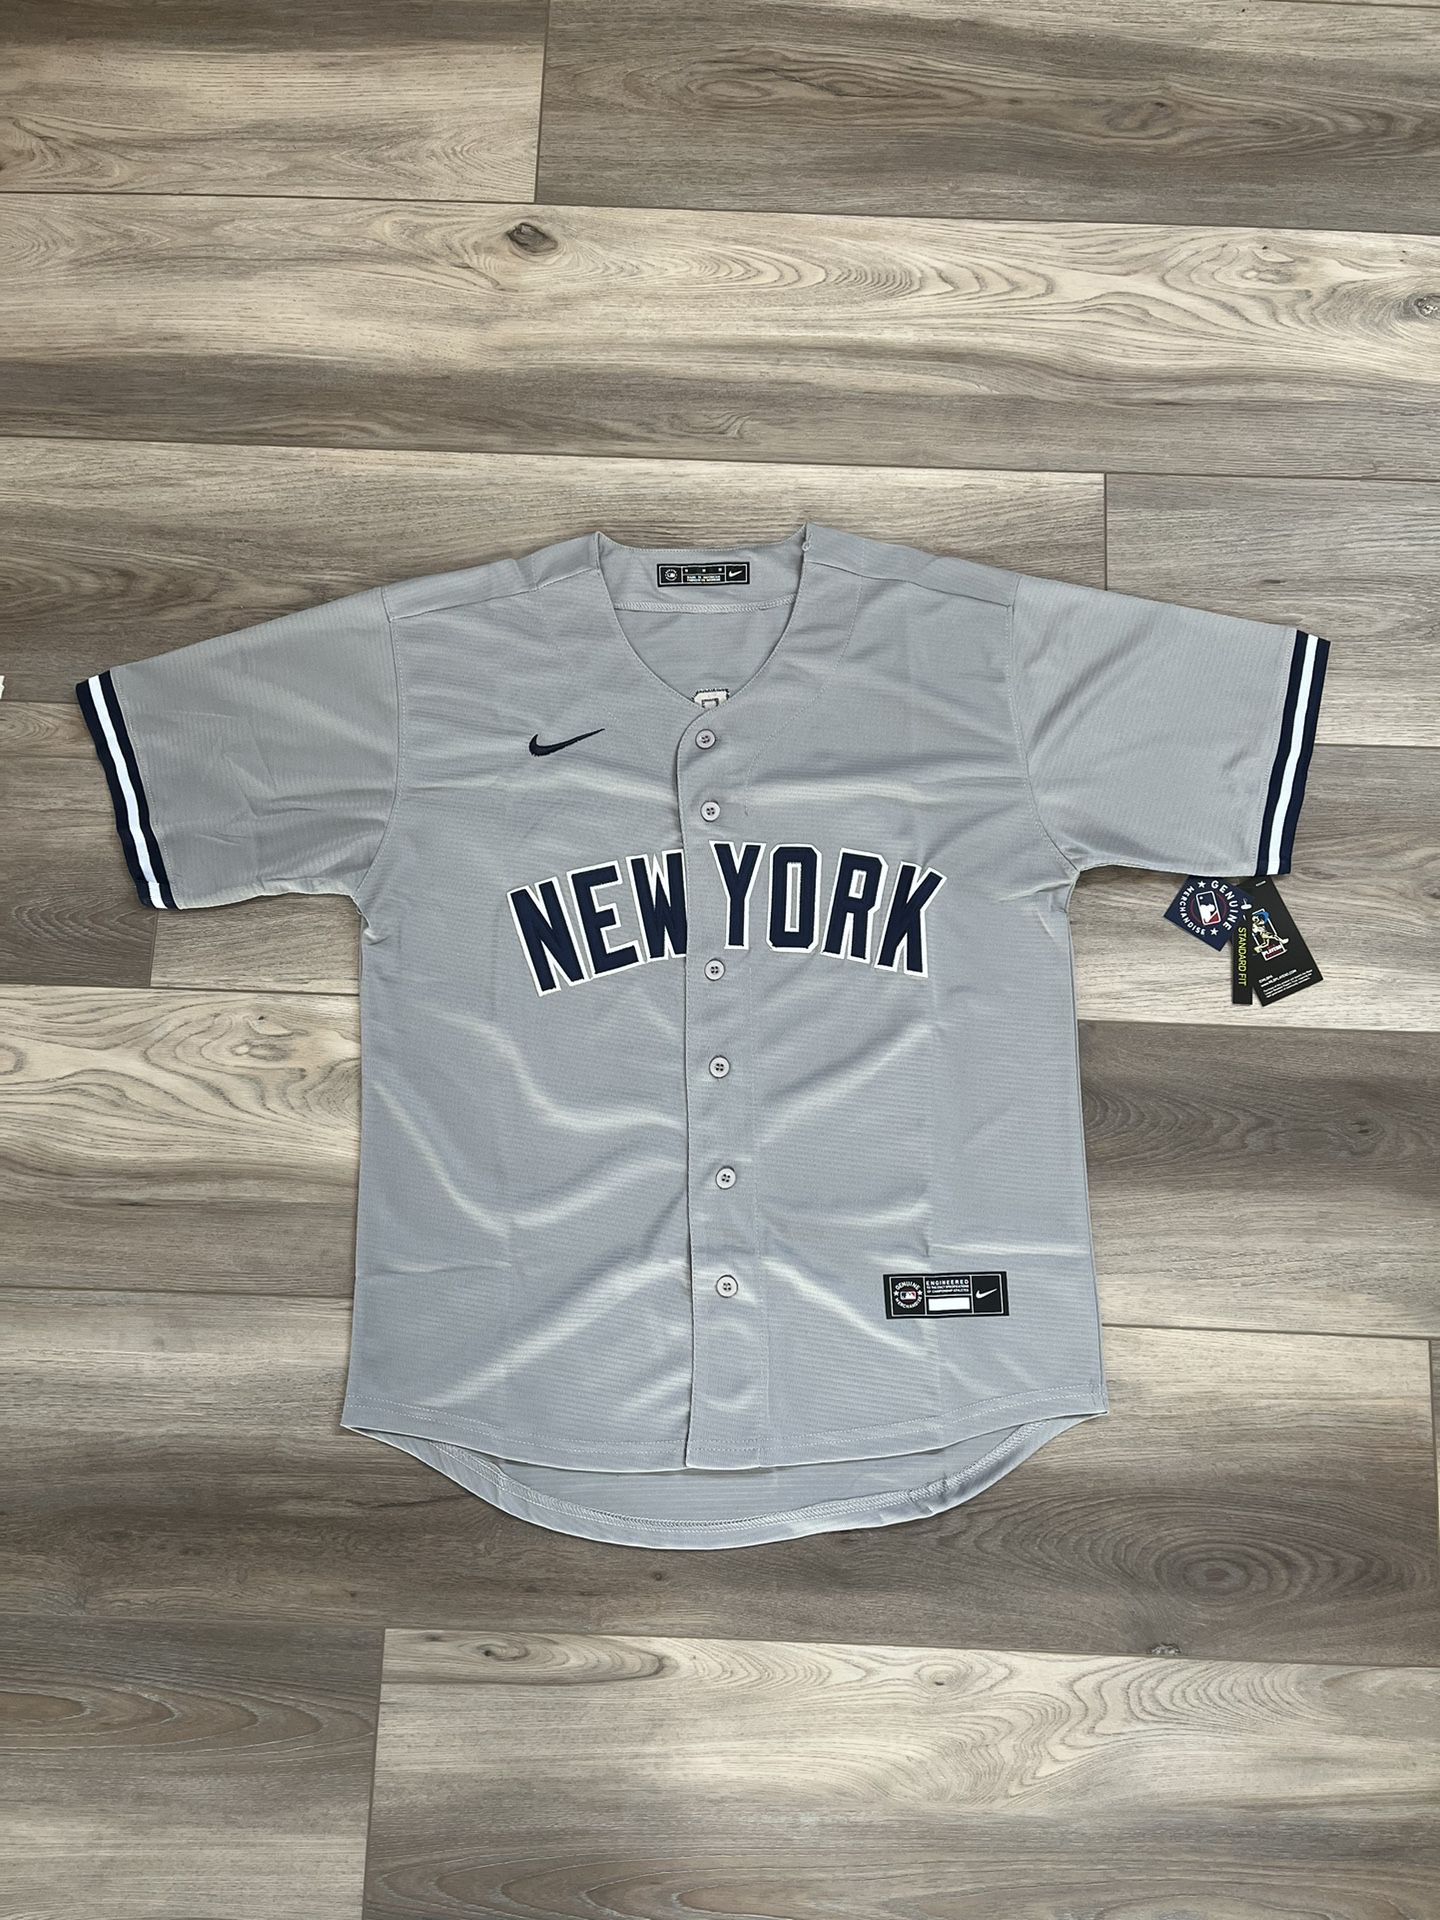 NWT Aaron Judge Stitched Mens New York Yankees Jersey #99 Gray Size MEDIUM